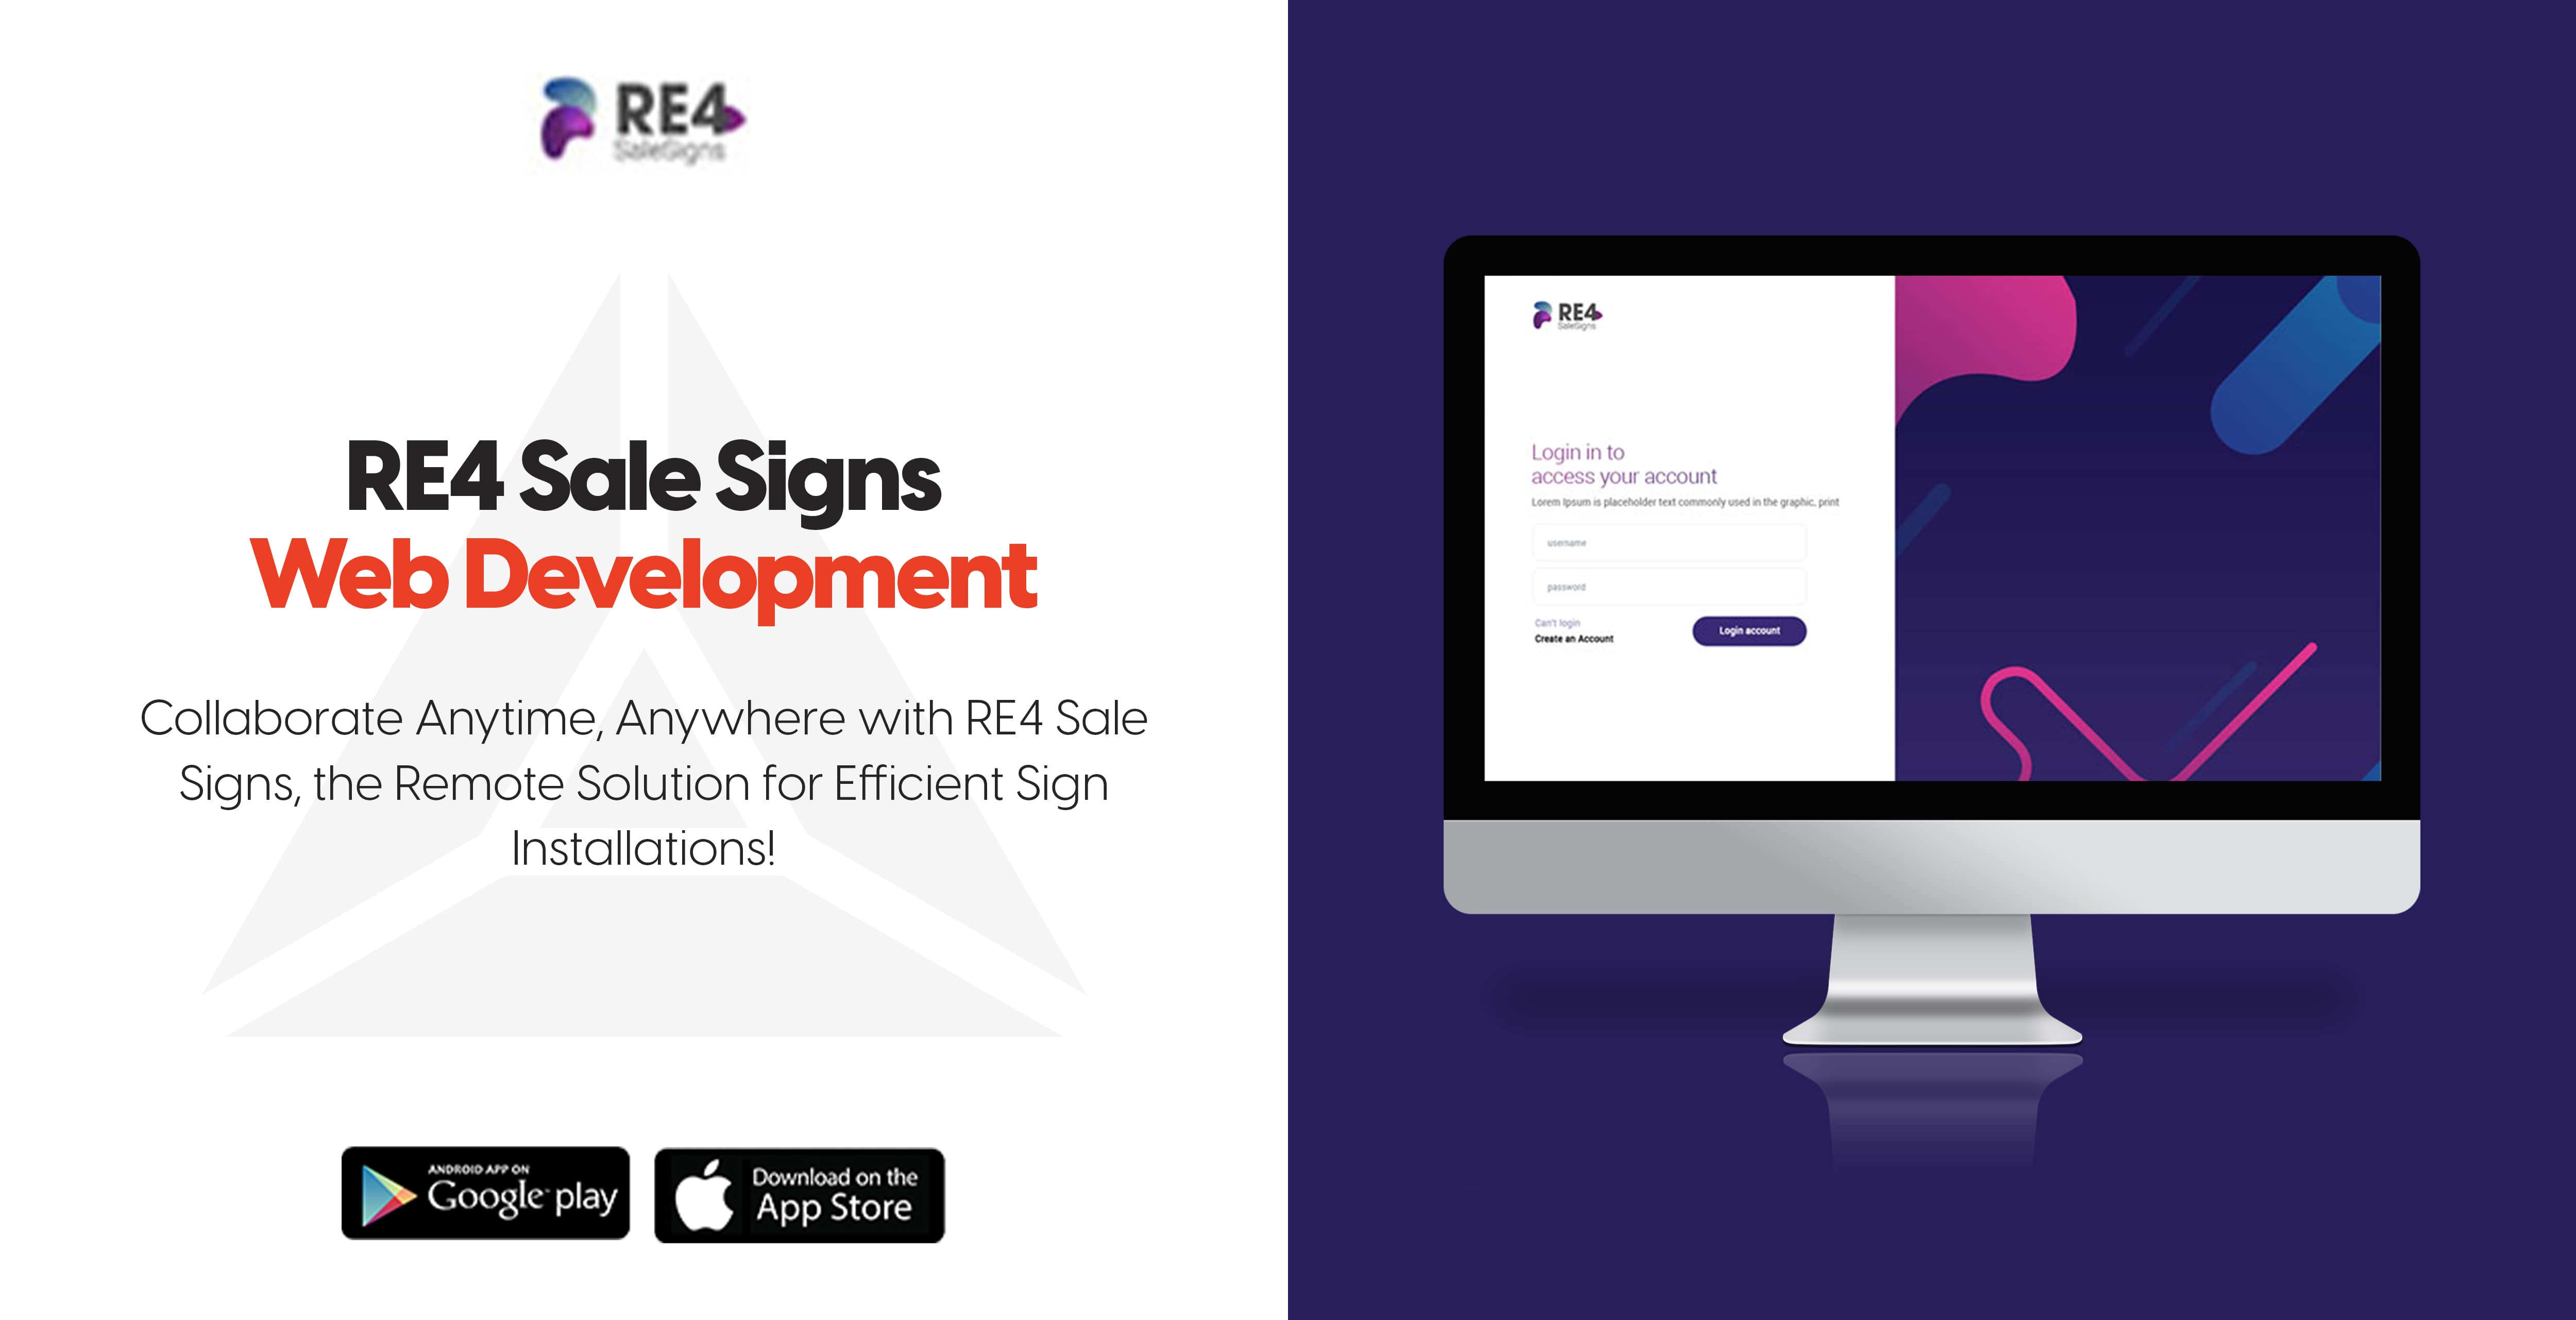 RE4 Sale Sign App